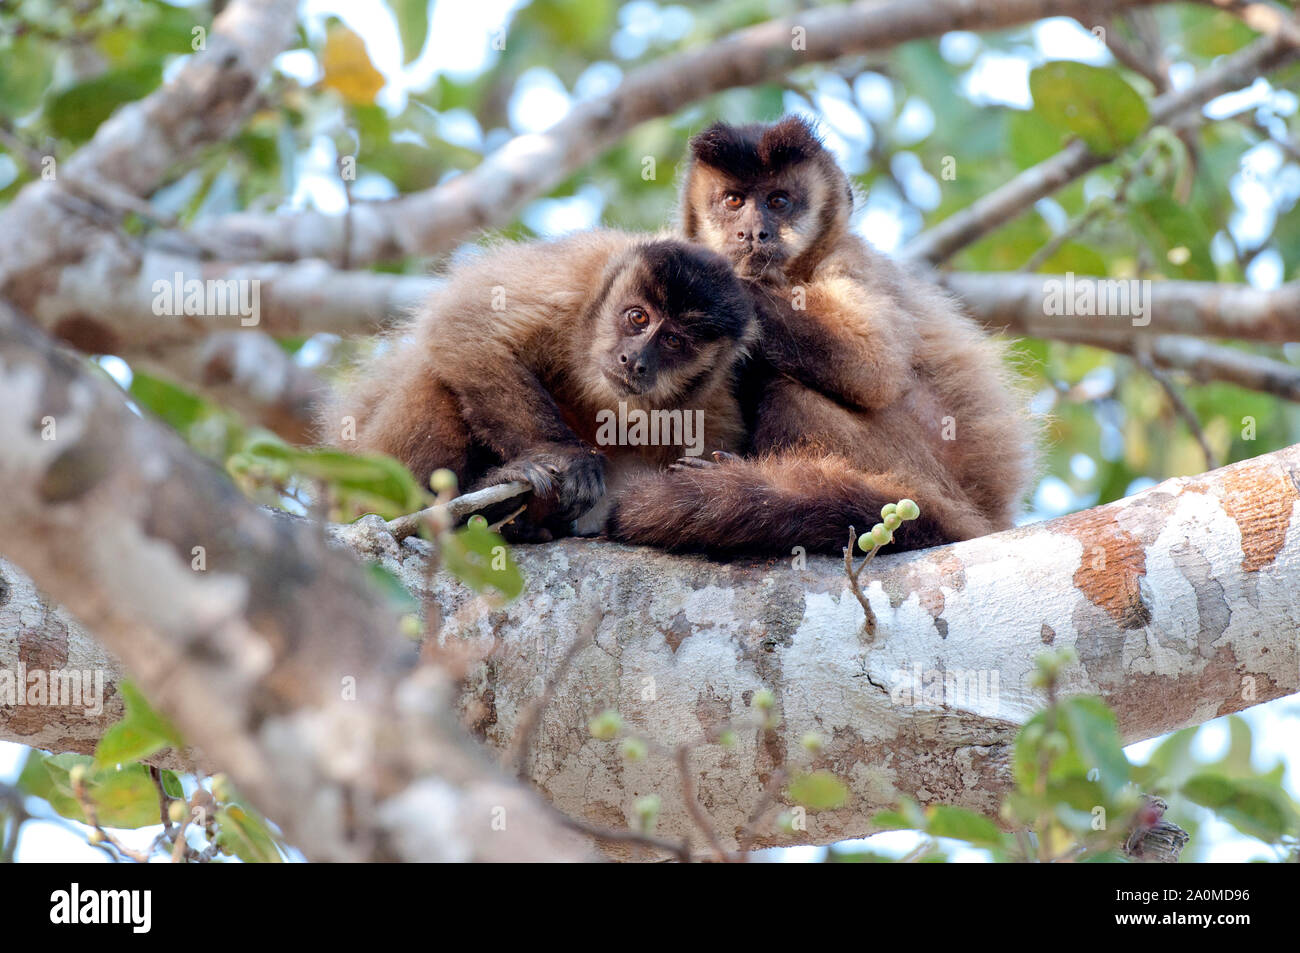 black-striped capuchin monkeys (Sapajus libidinosus), engaged in social grooming (allogrooming) in the Pantanal, Brazil Stock Photo